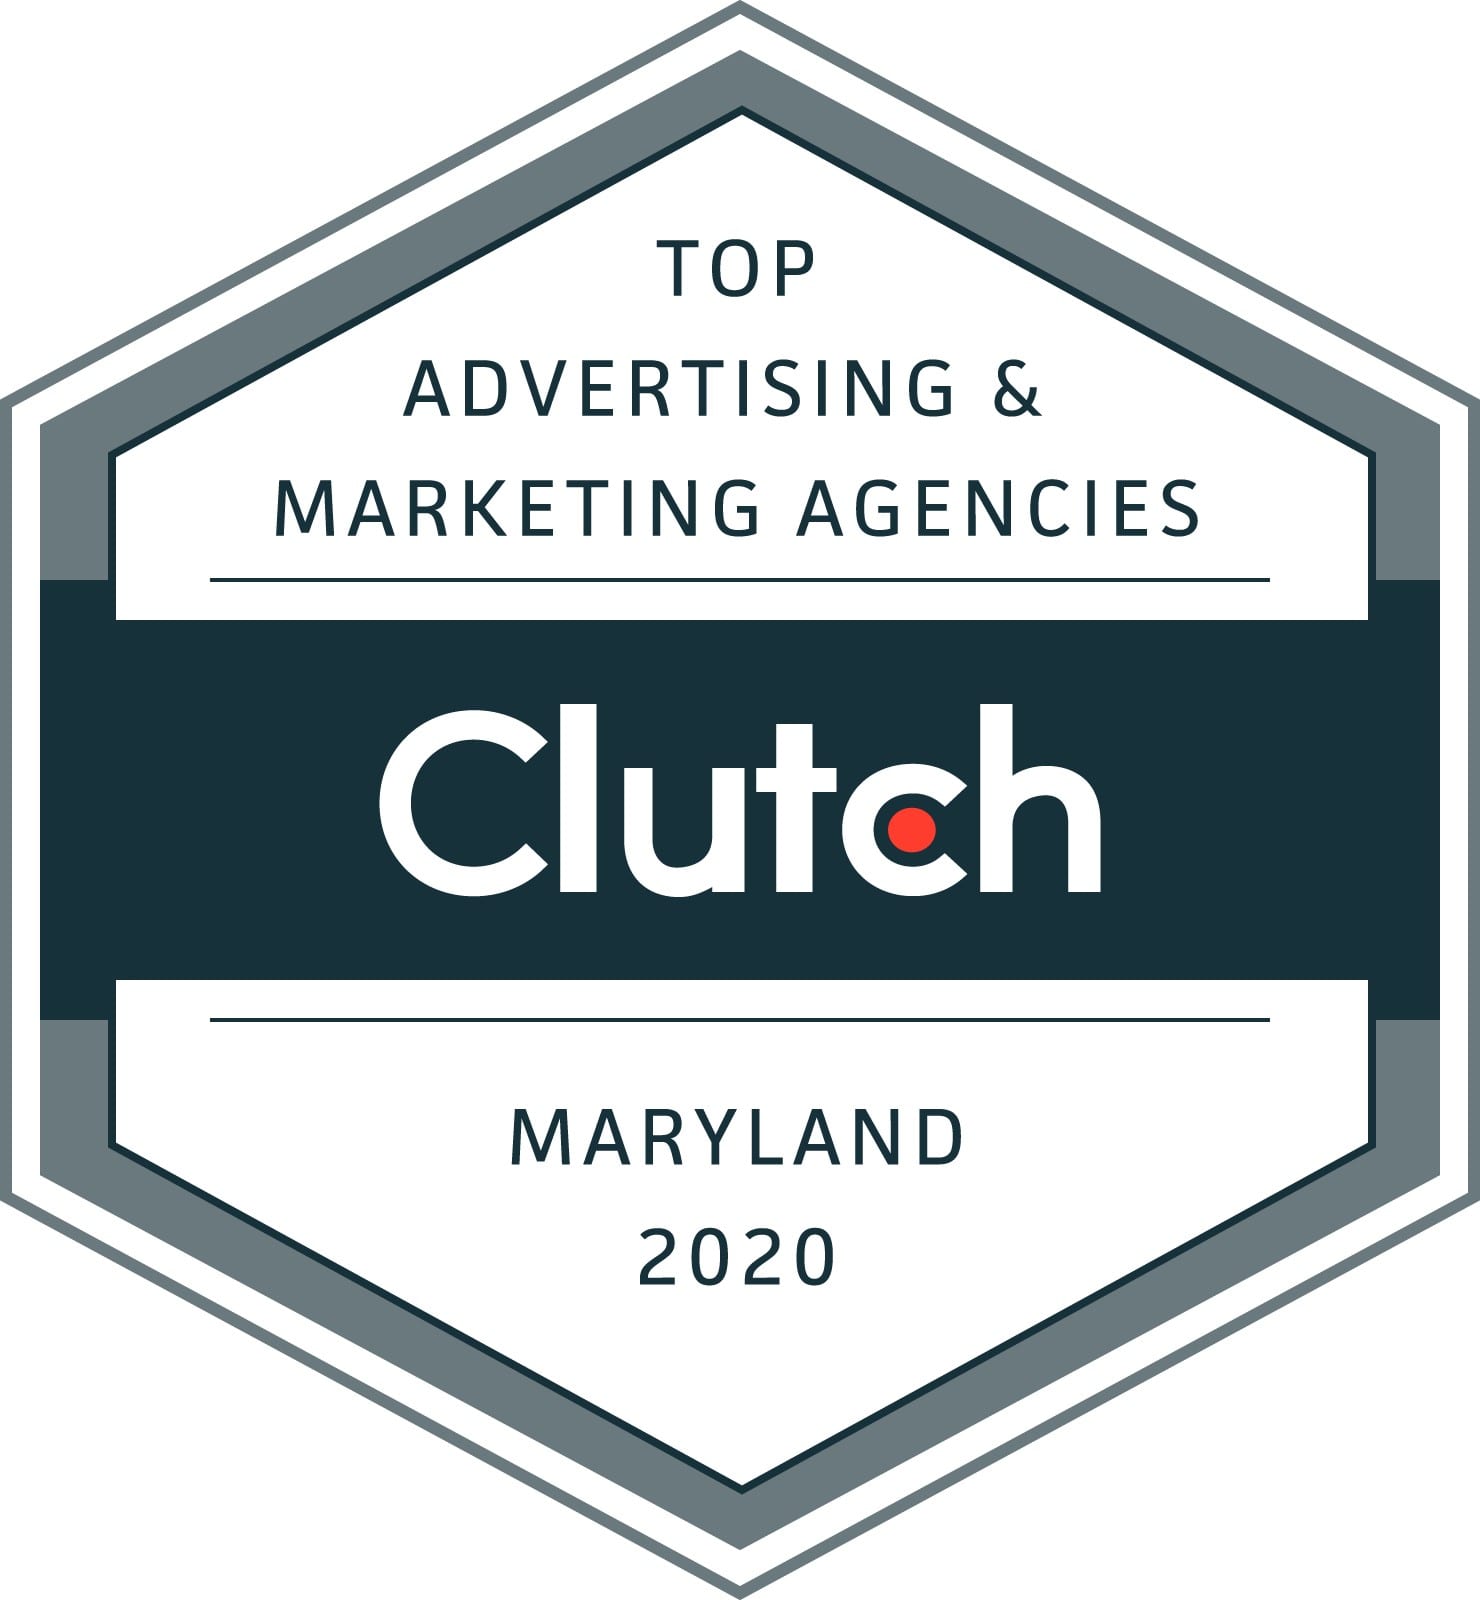 Clutch Top Marketing Agencies of 2020